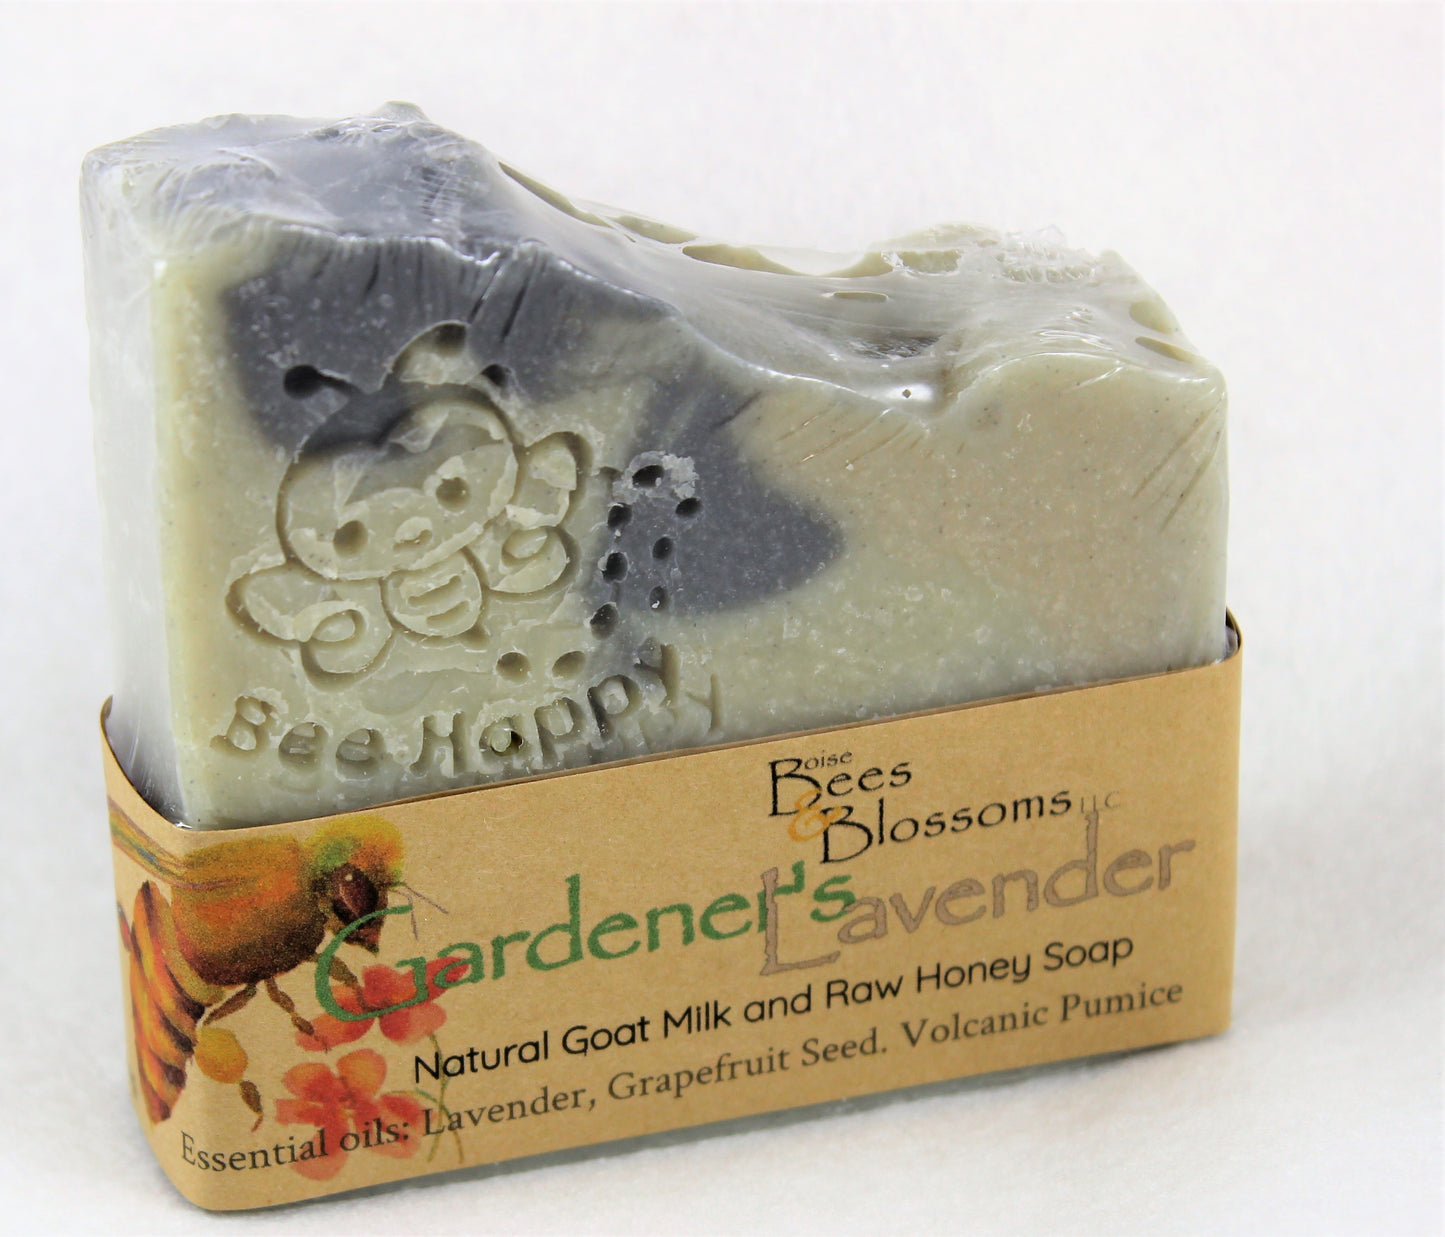 Gardener's Exfoliating Soap - Lavender